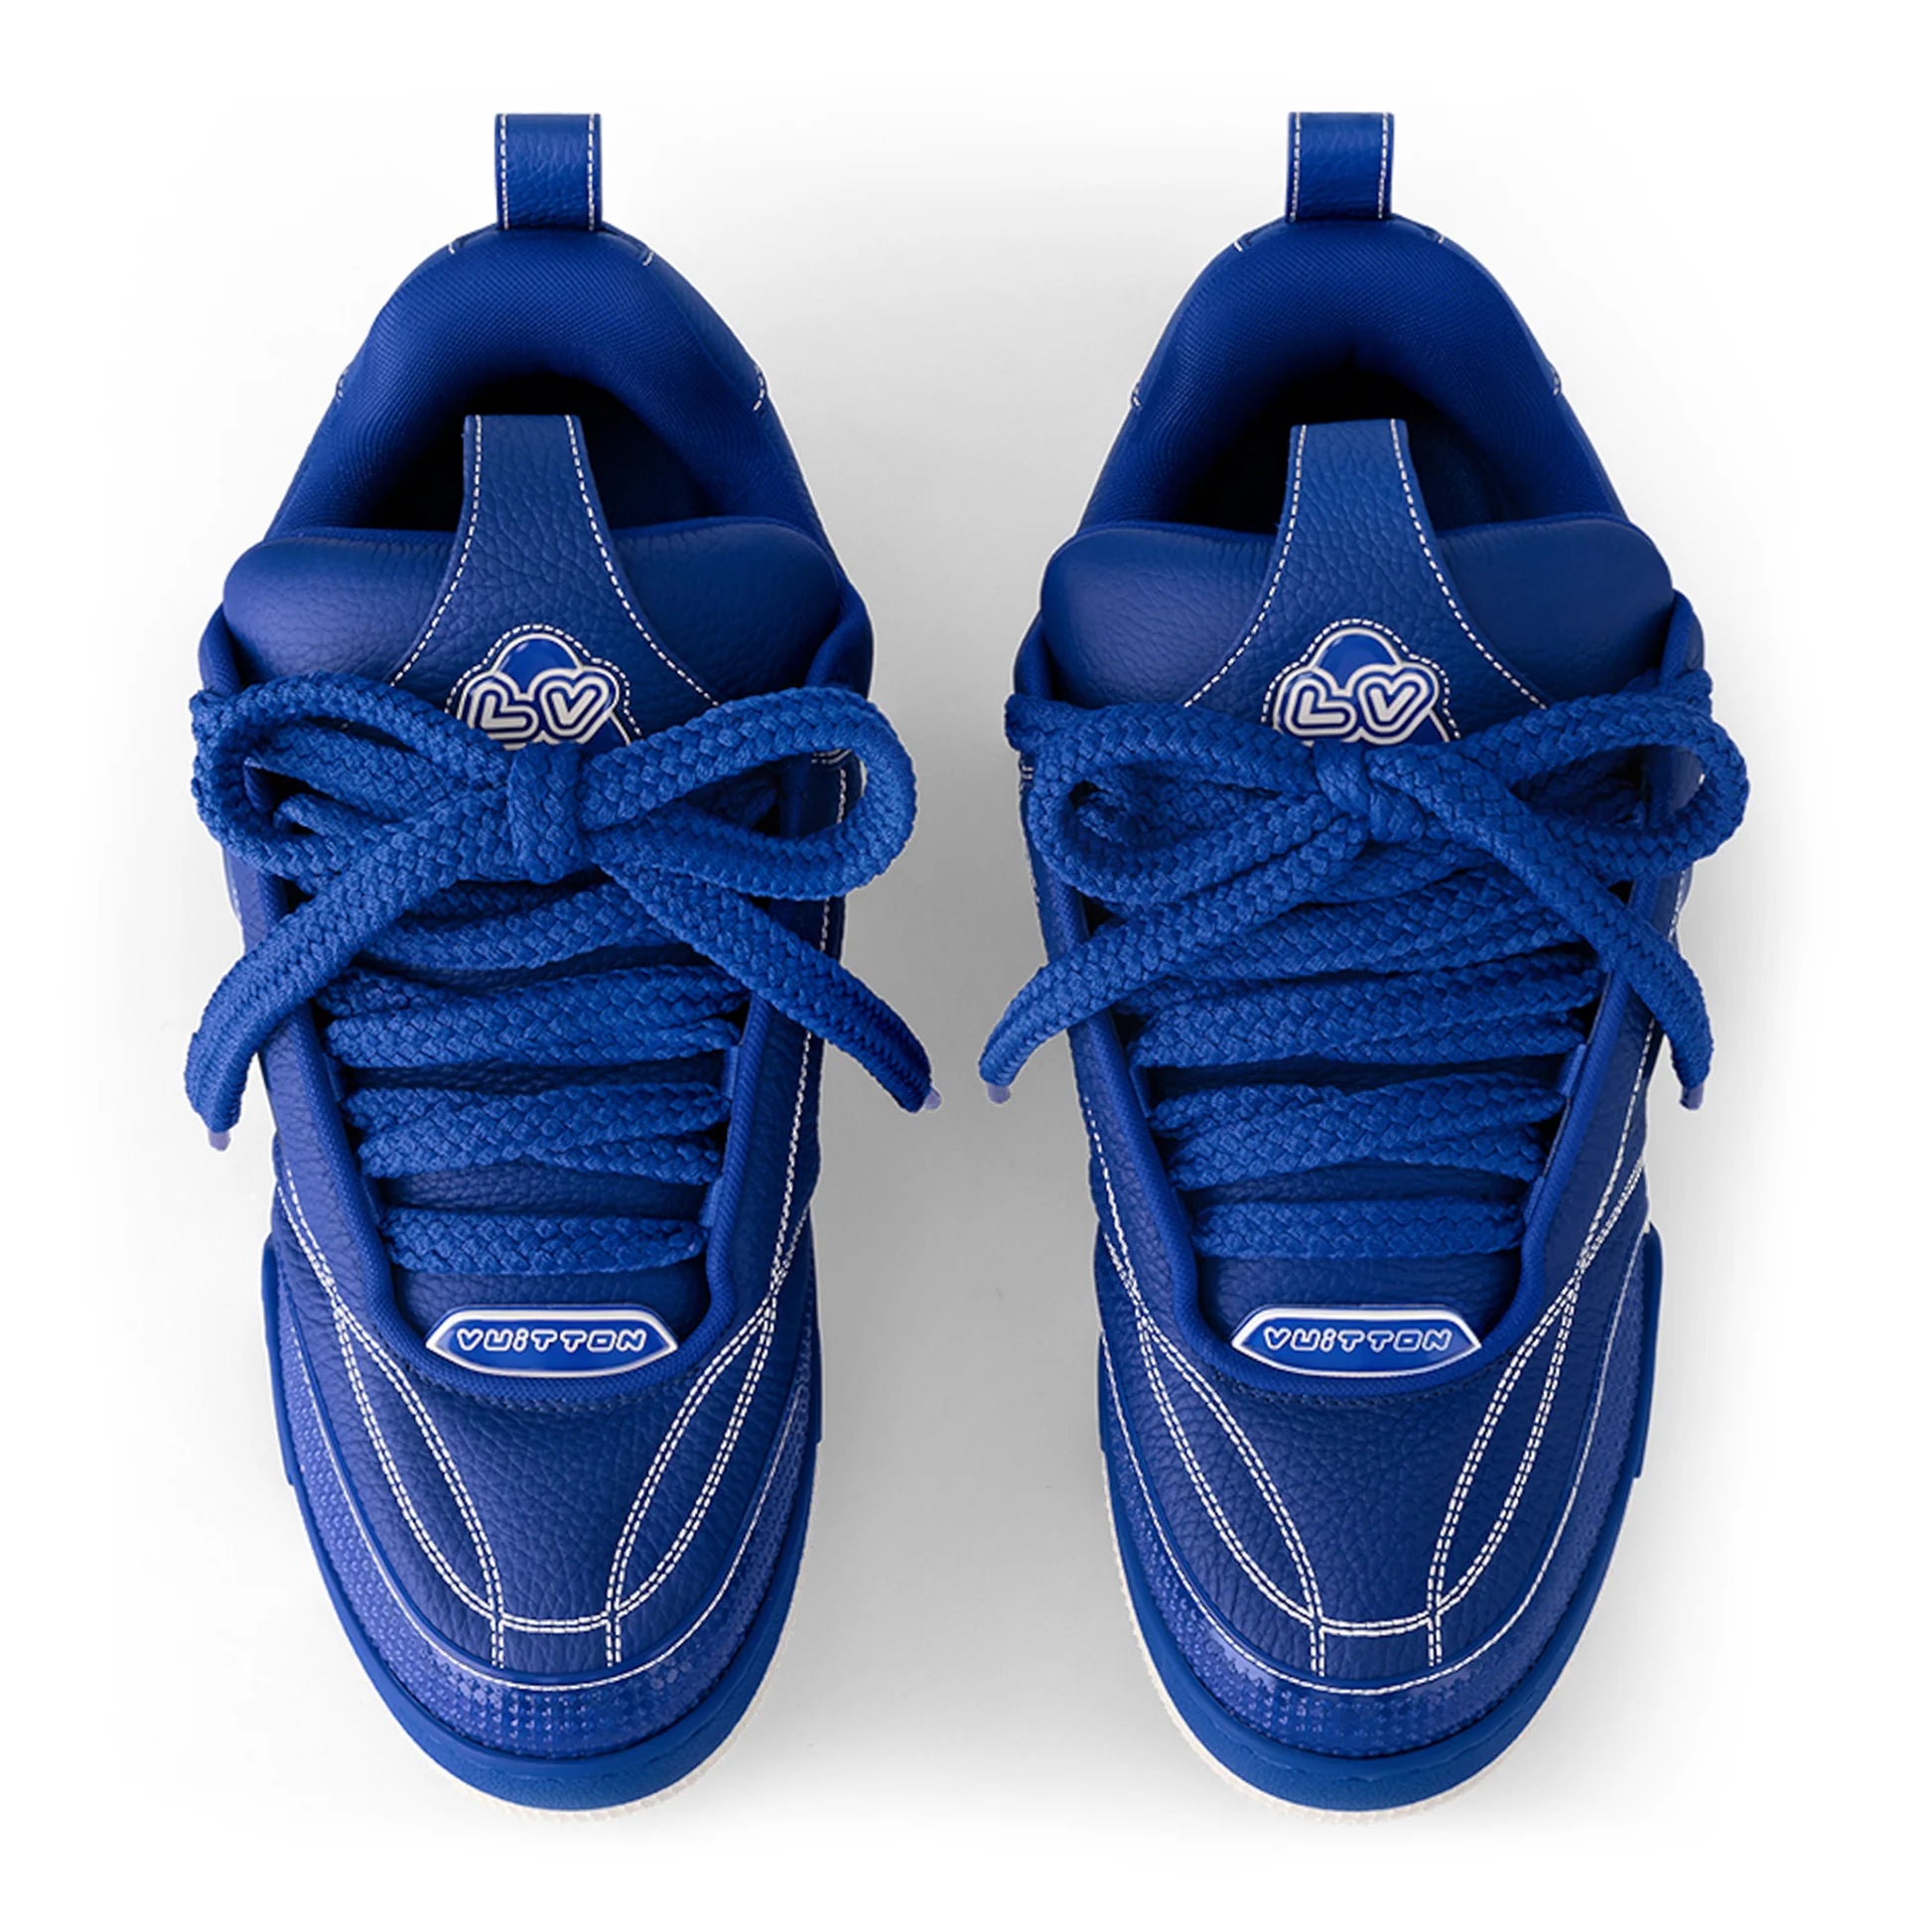 Louis Vuitton LV Skate Trainer Blue Sneaker